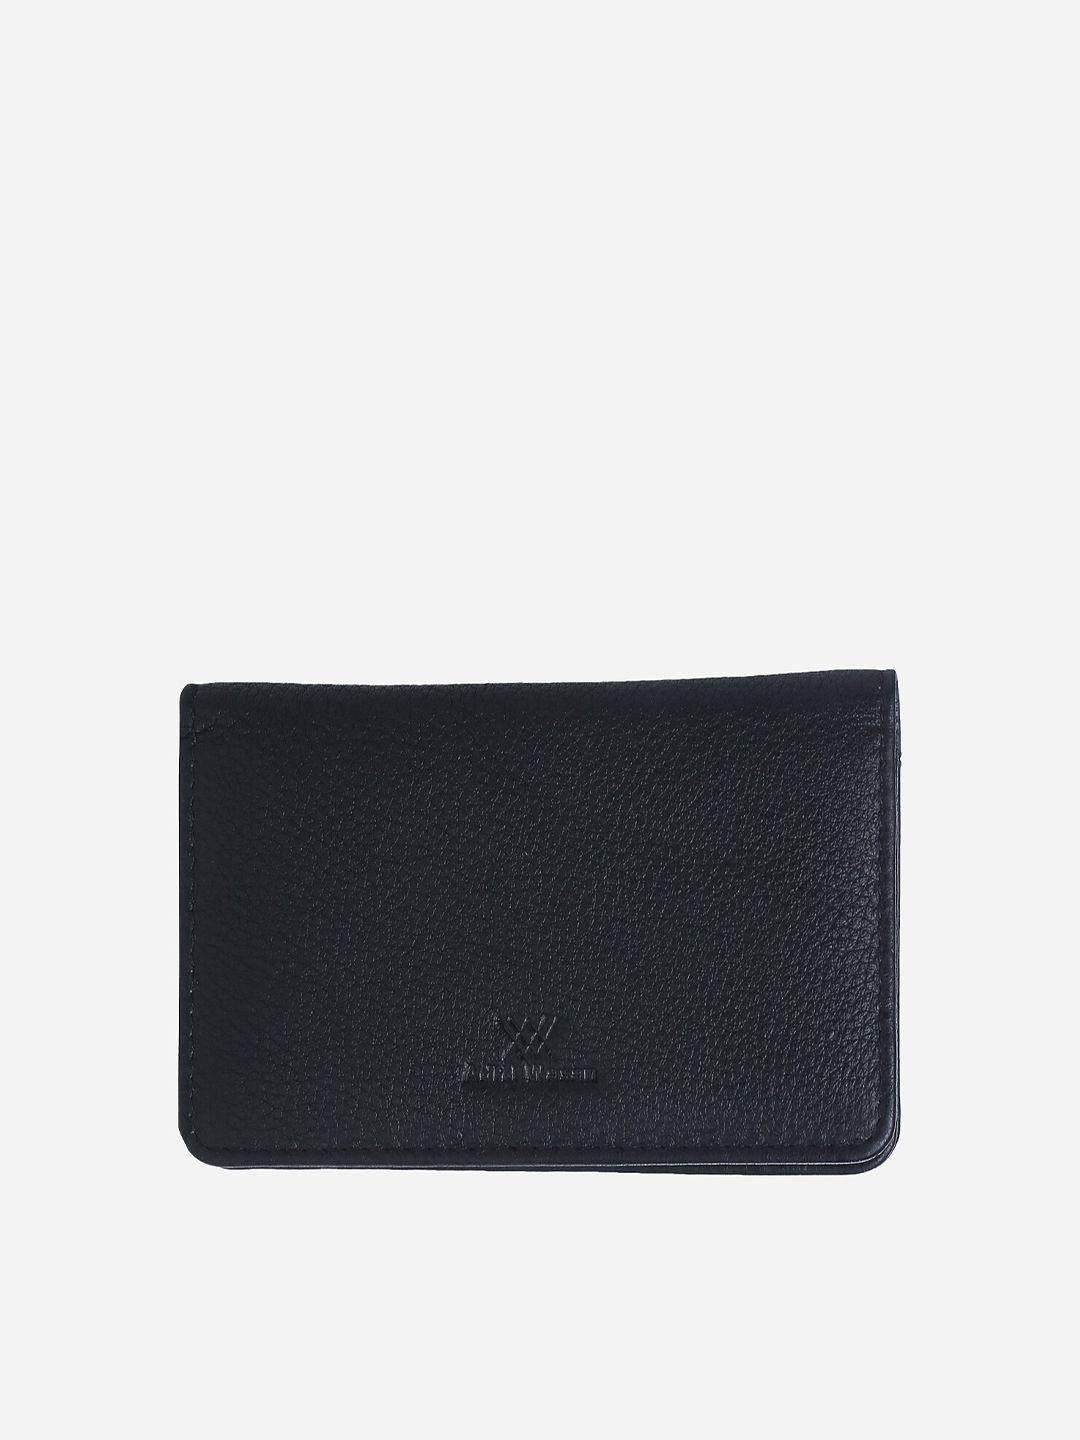 aditi-wasan-unisex-black-leather-card-holder